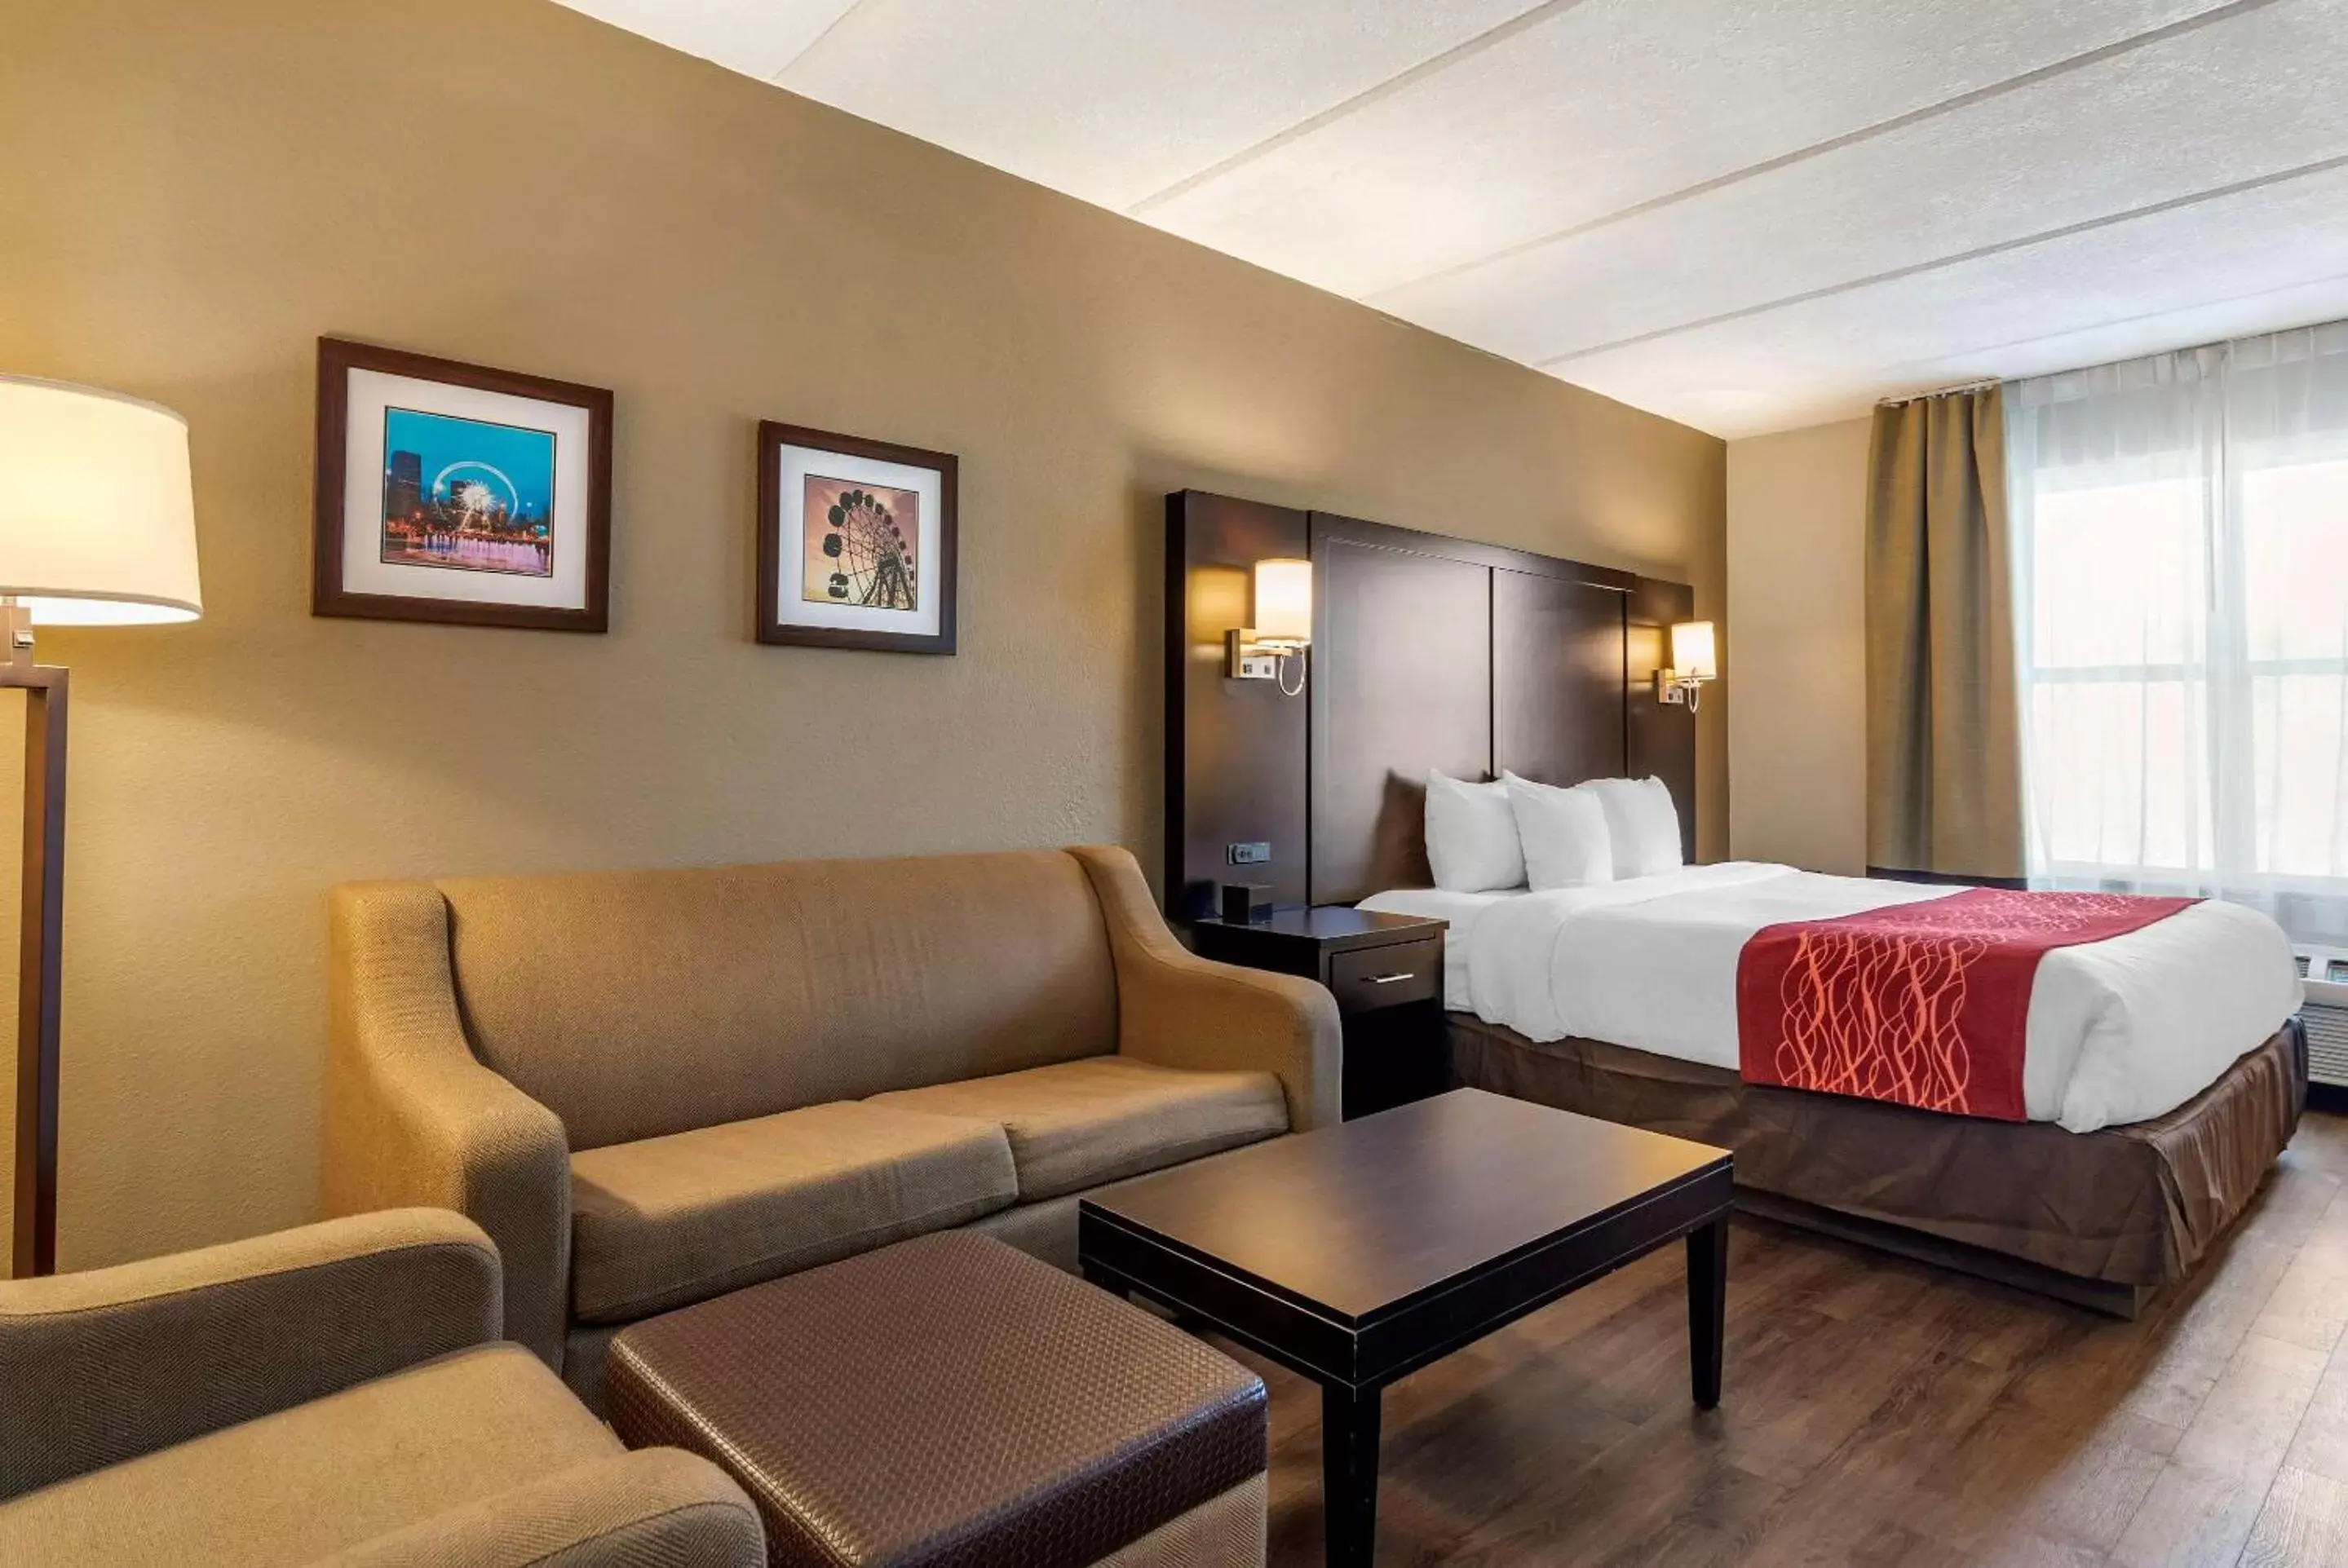 Bedroom in Comfort Inn & Suites near Six Flags